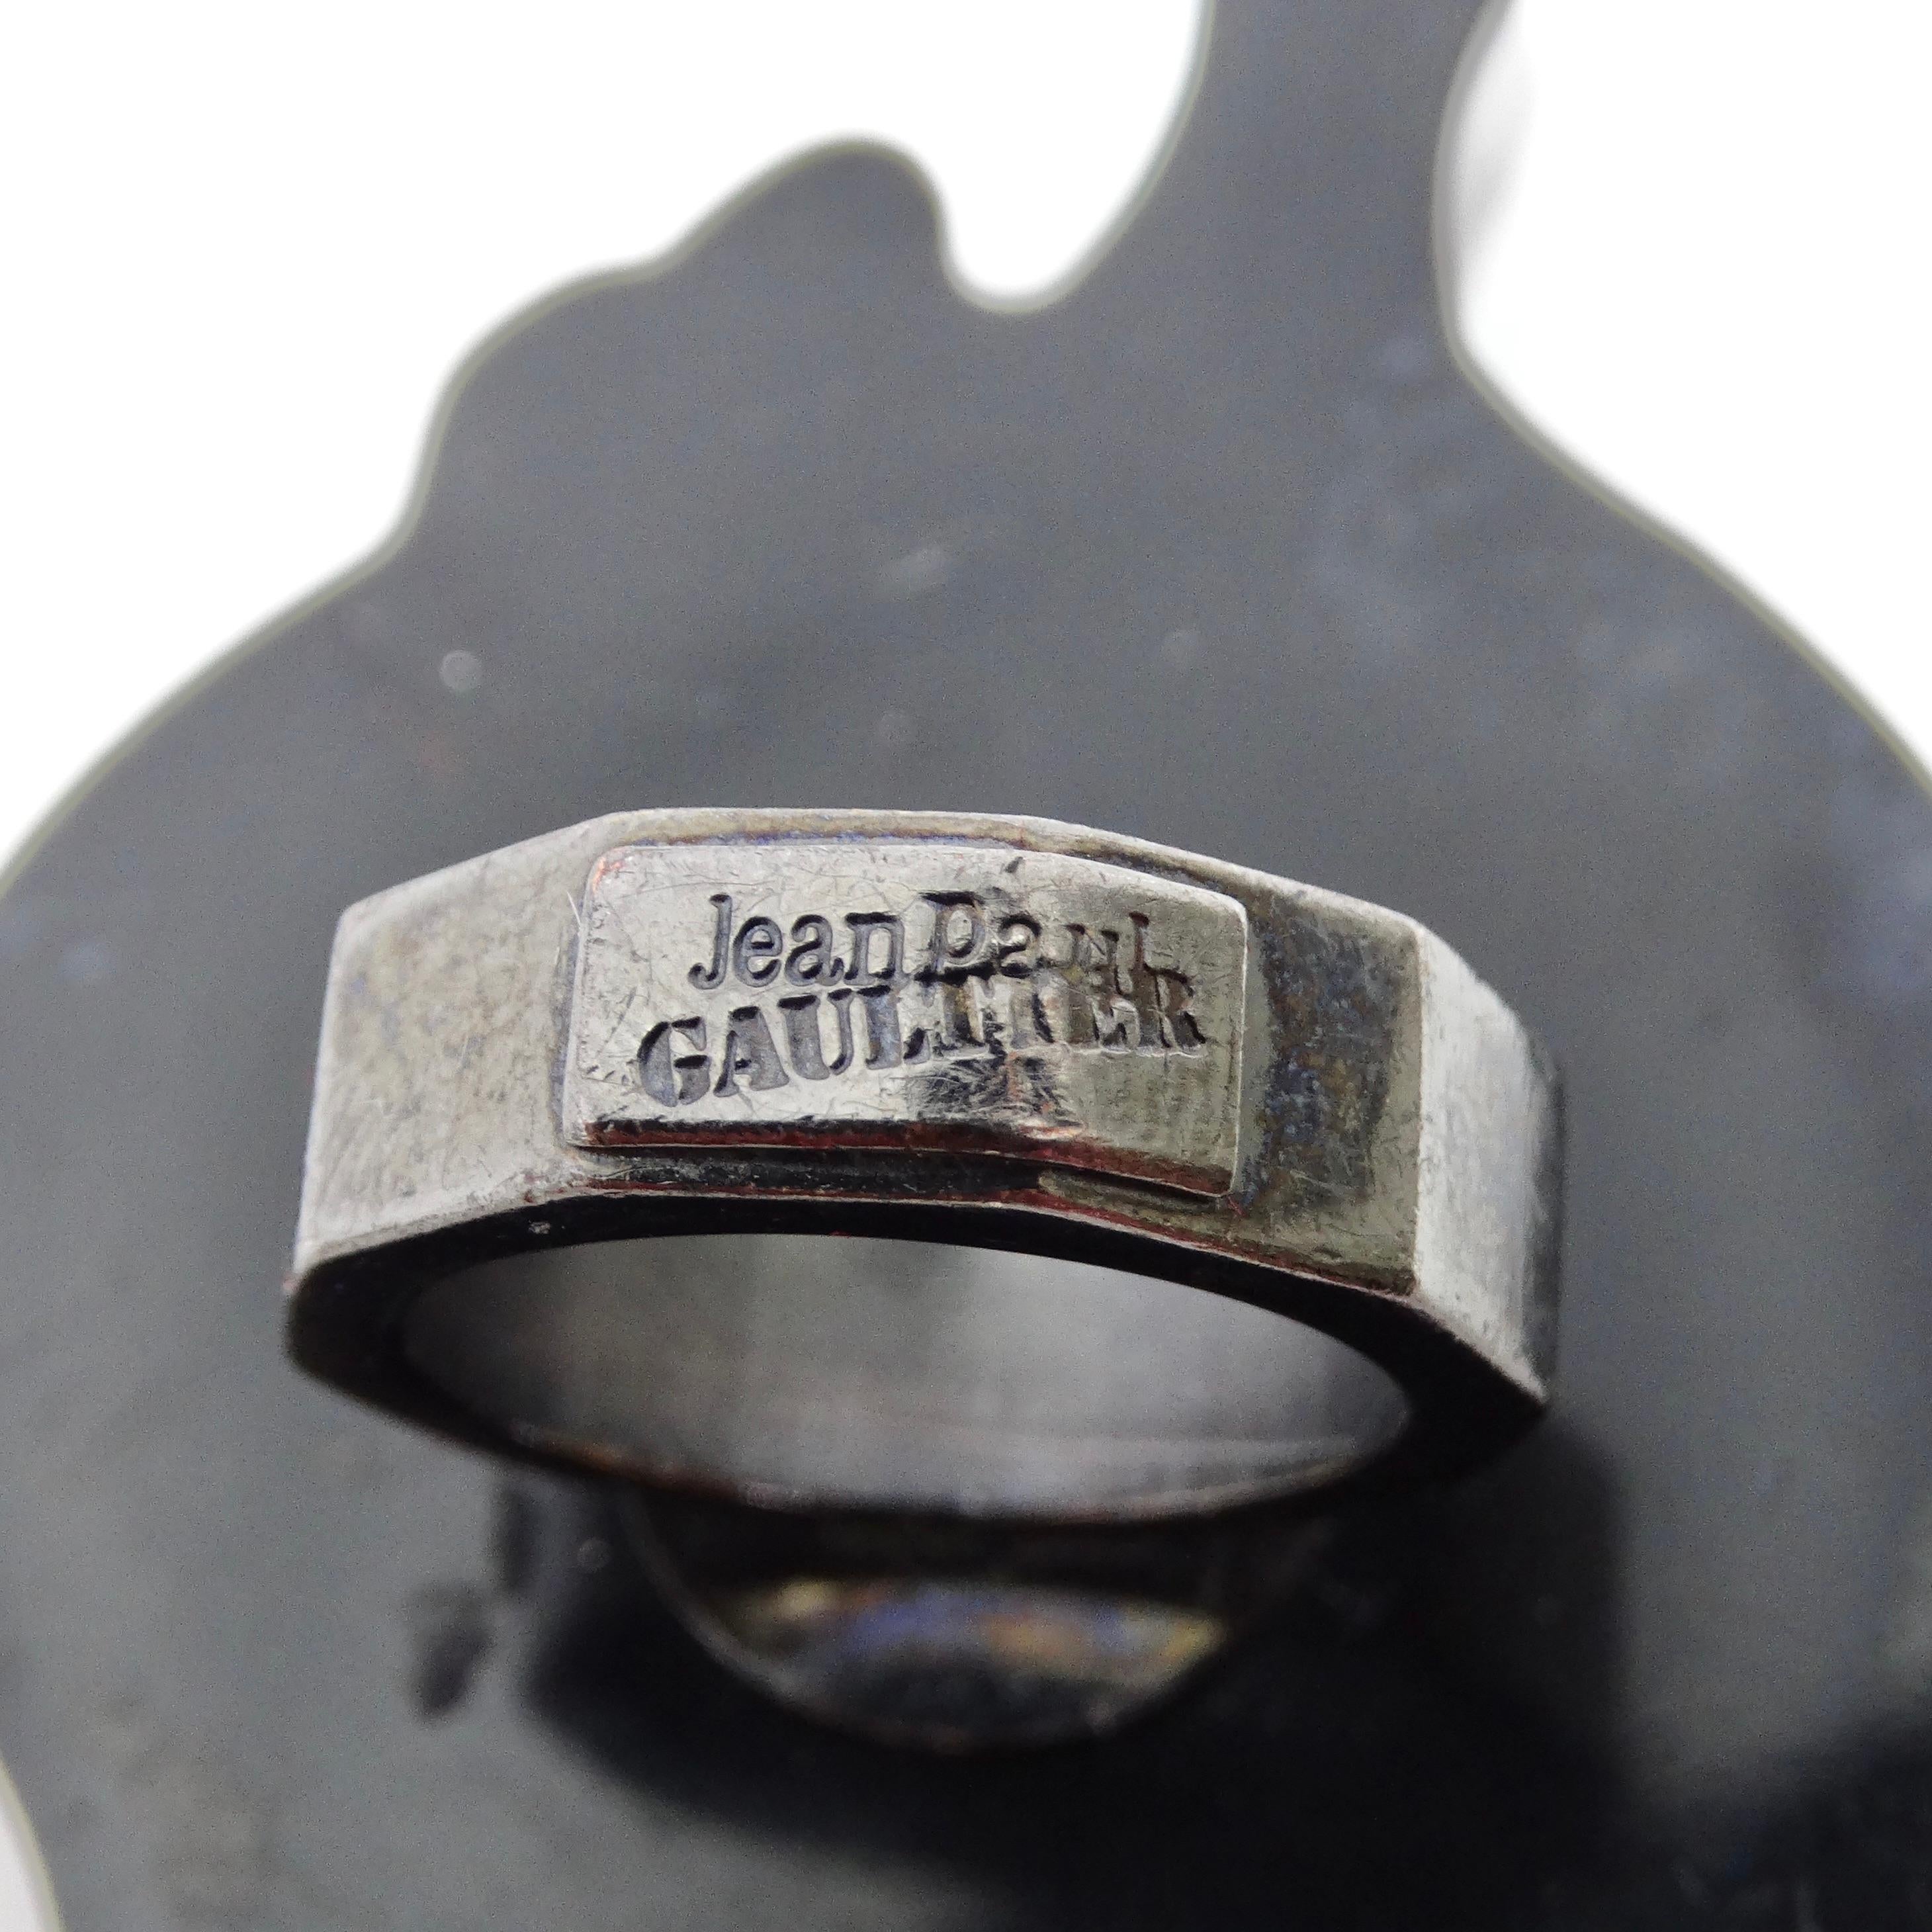 Jean Paul Gaultier Avant Garde Jumbo Statement Ring For Sale 5